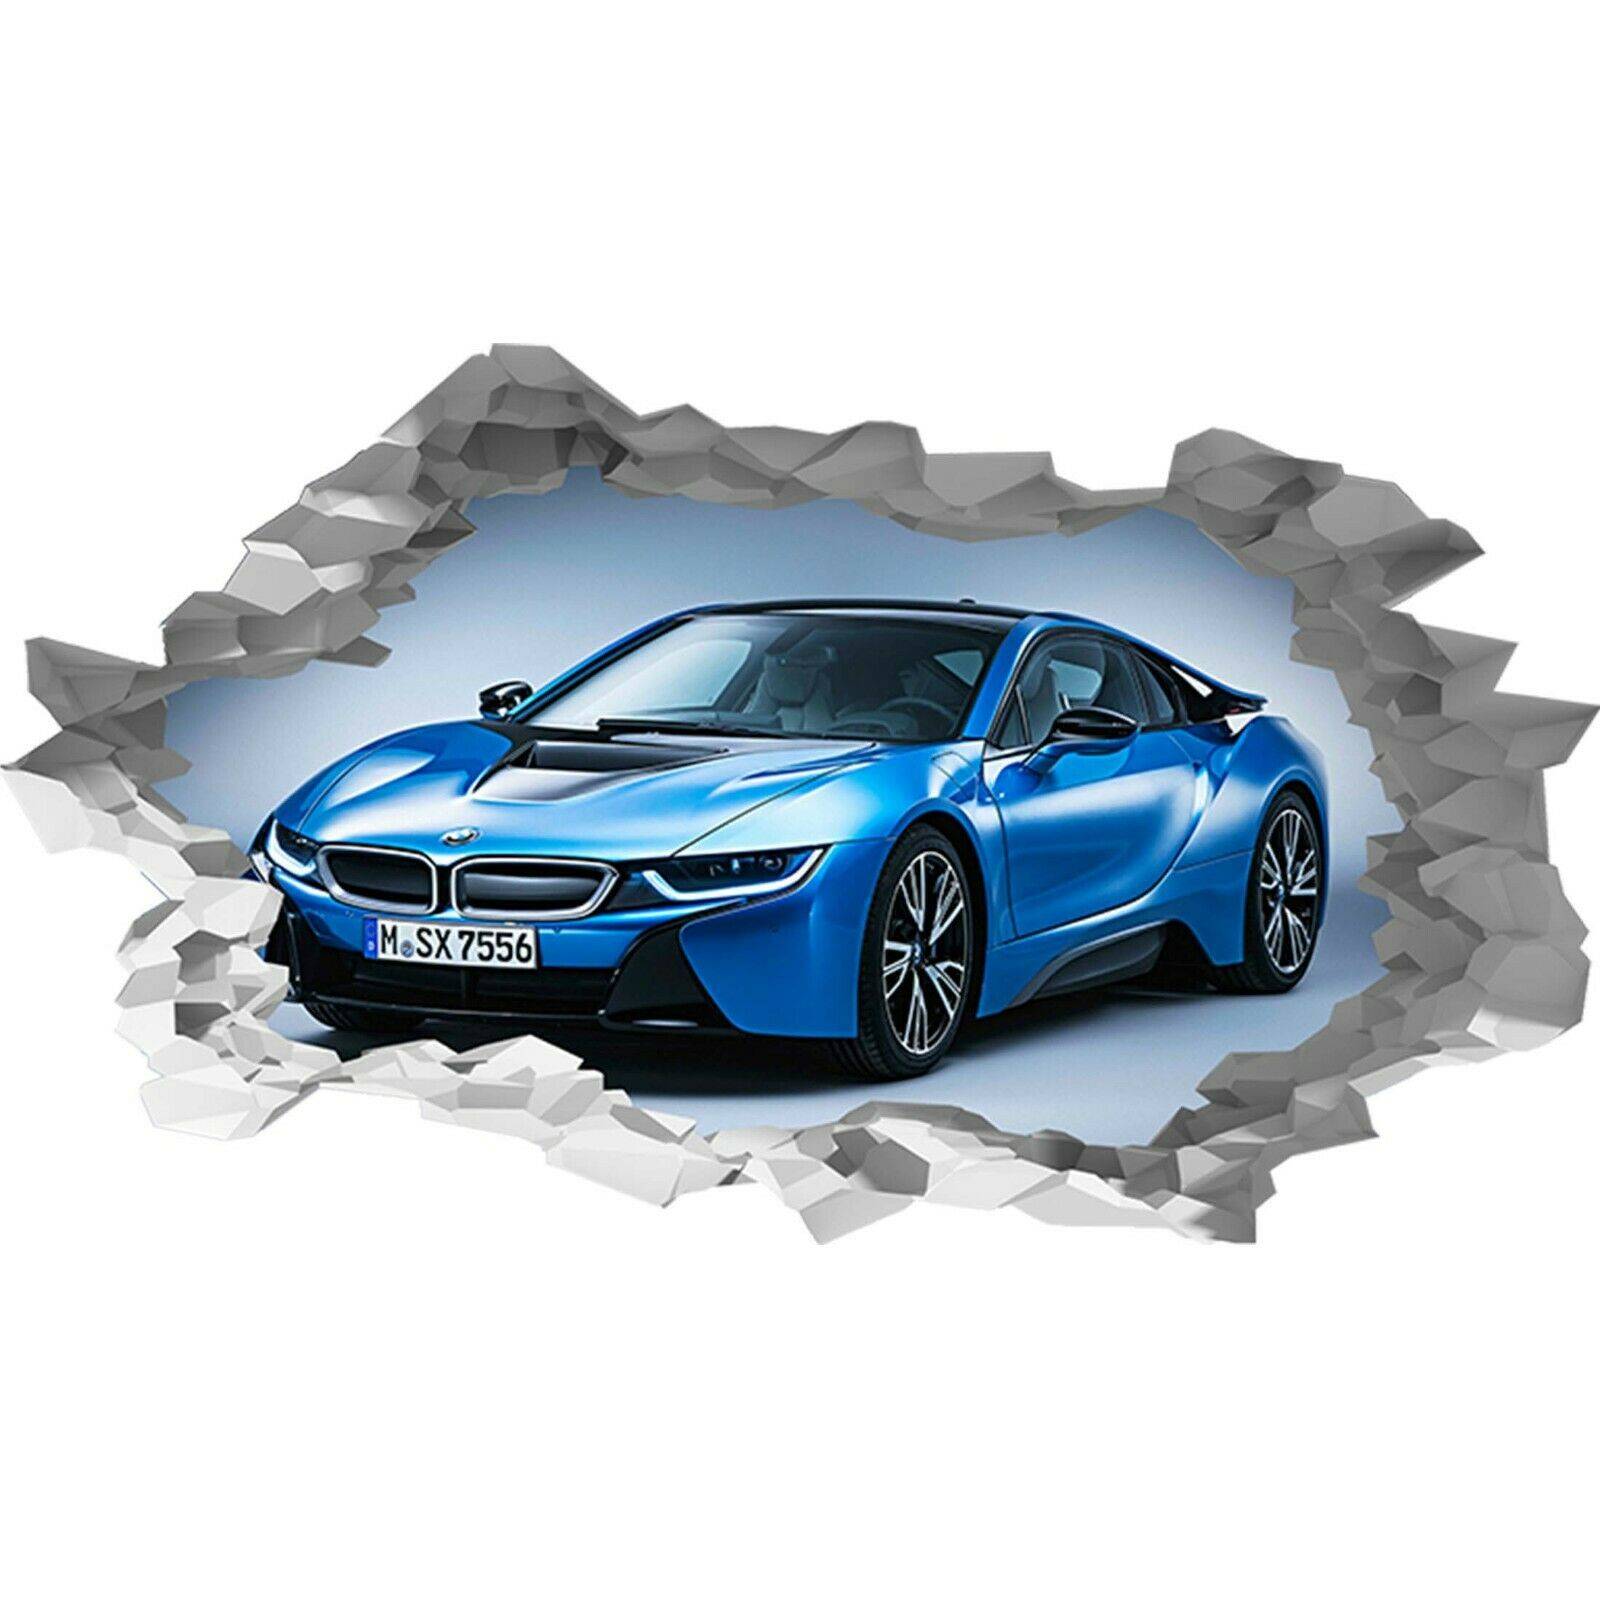 BMW I7 Blue Sport Car Poster- Wall Sticker - Blue Side Studio